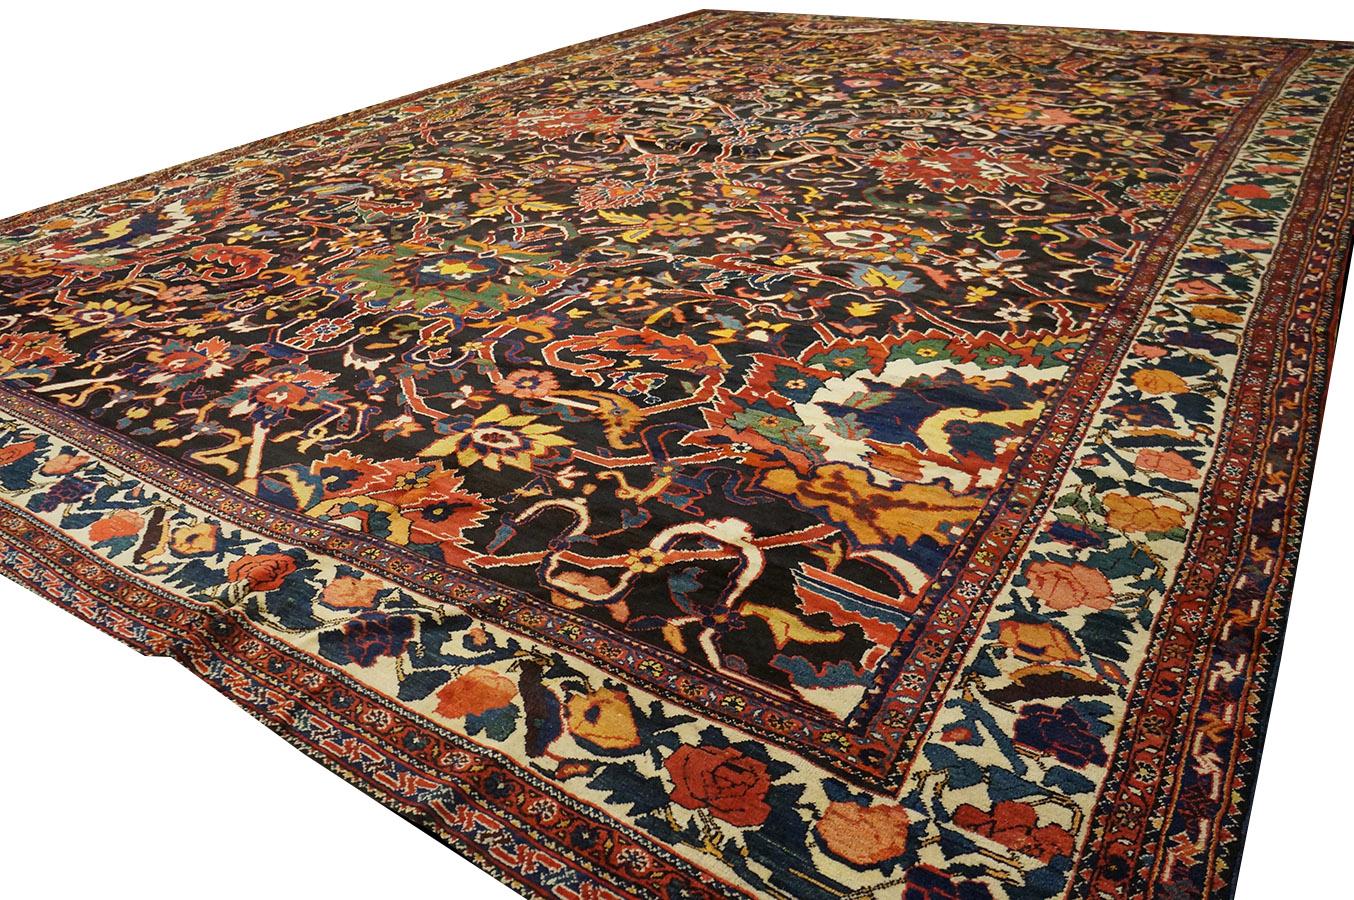 Early 20th Century Persian Bakhtiari Carpet on Black Background. 
( 16' x 23' - 487 x 702 )